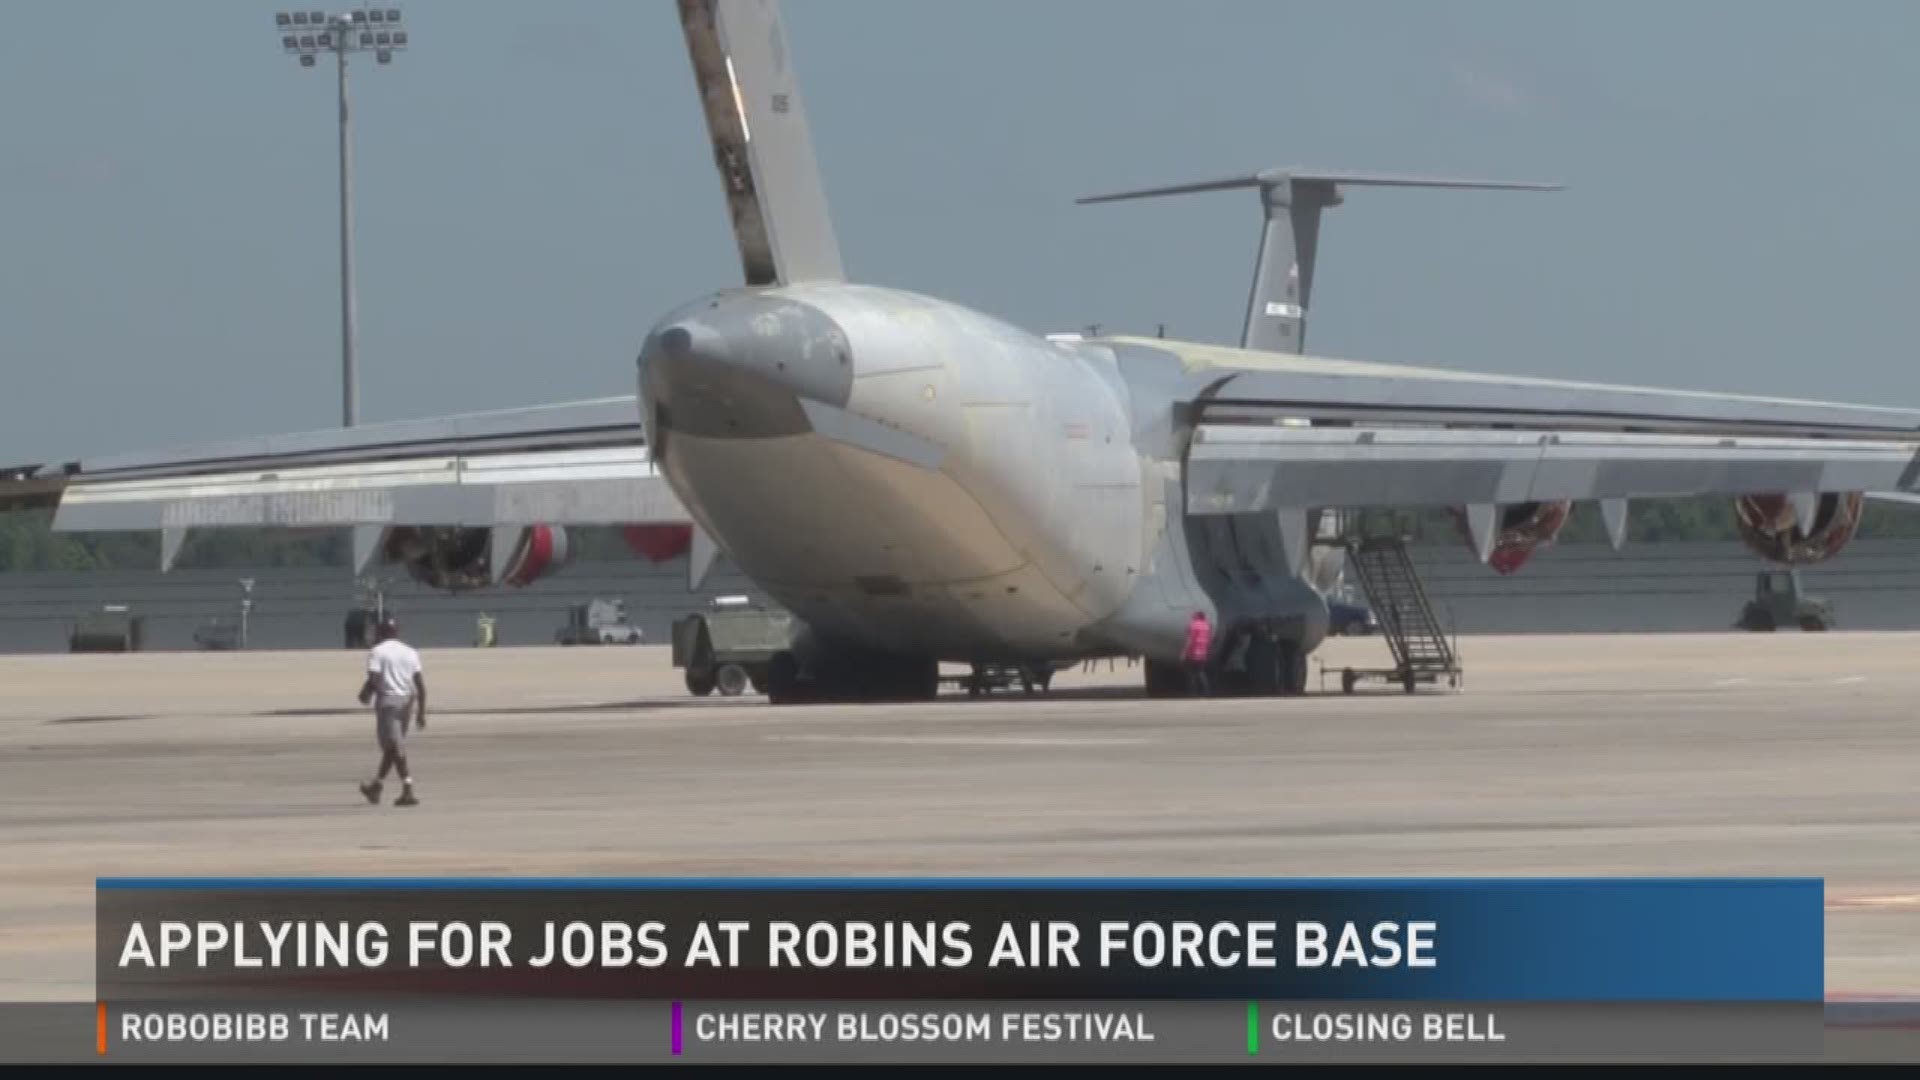 Applying for jobs at Robins Air Force Base